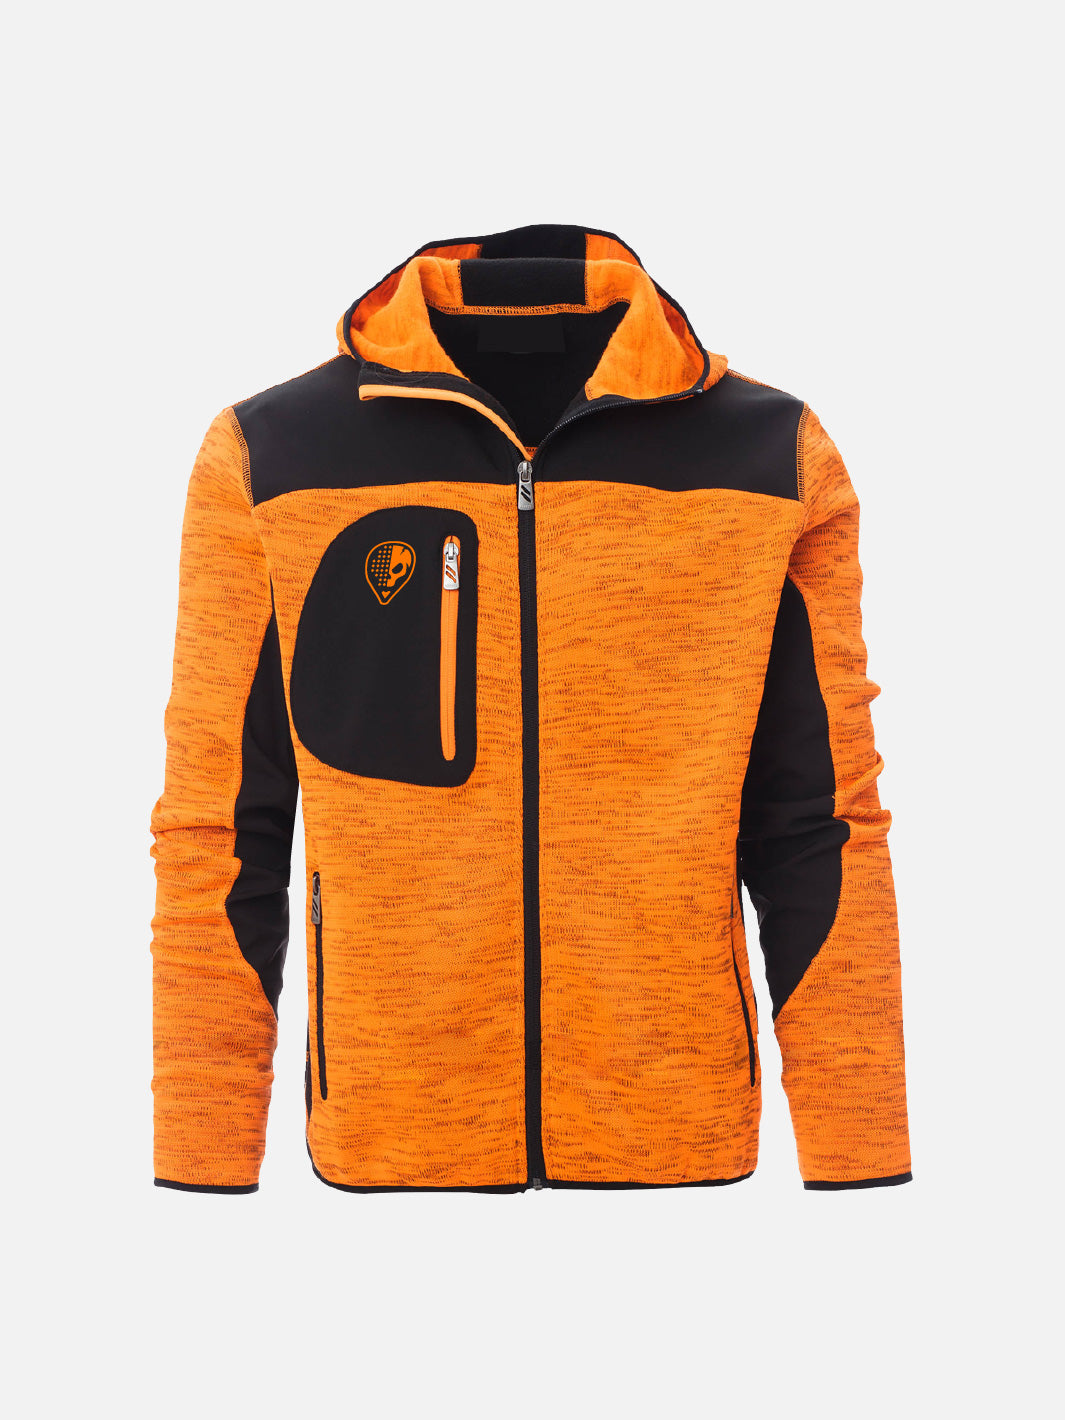 Men's Tech Jacket - Orange